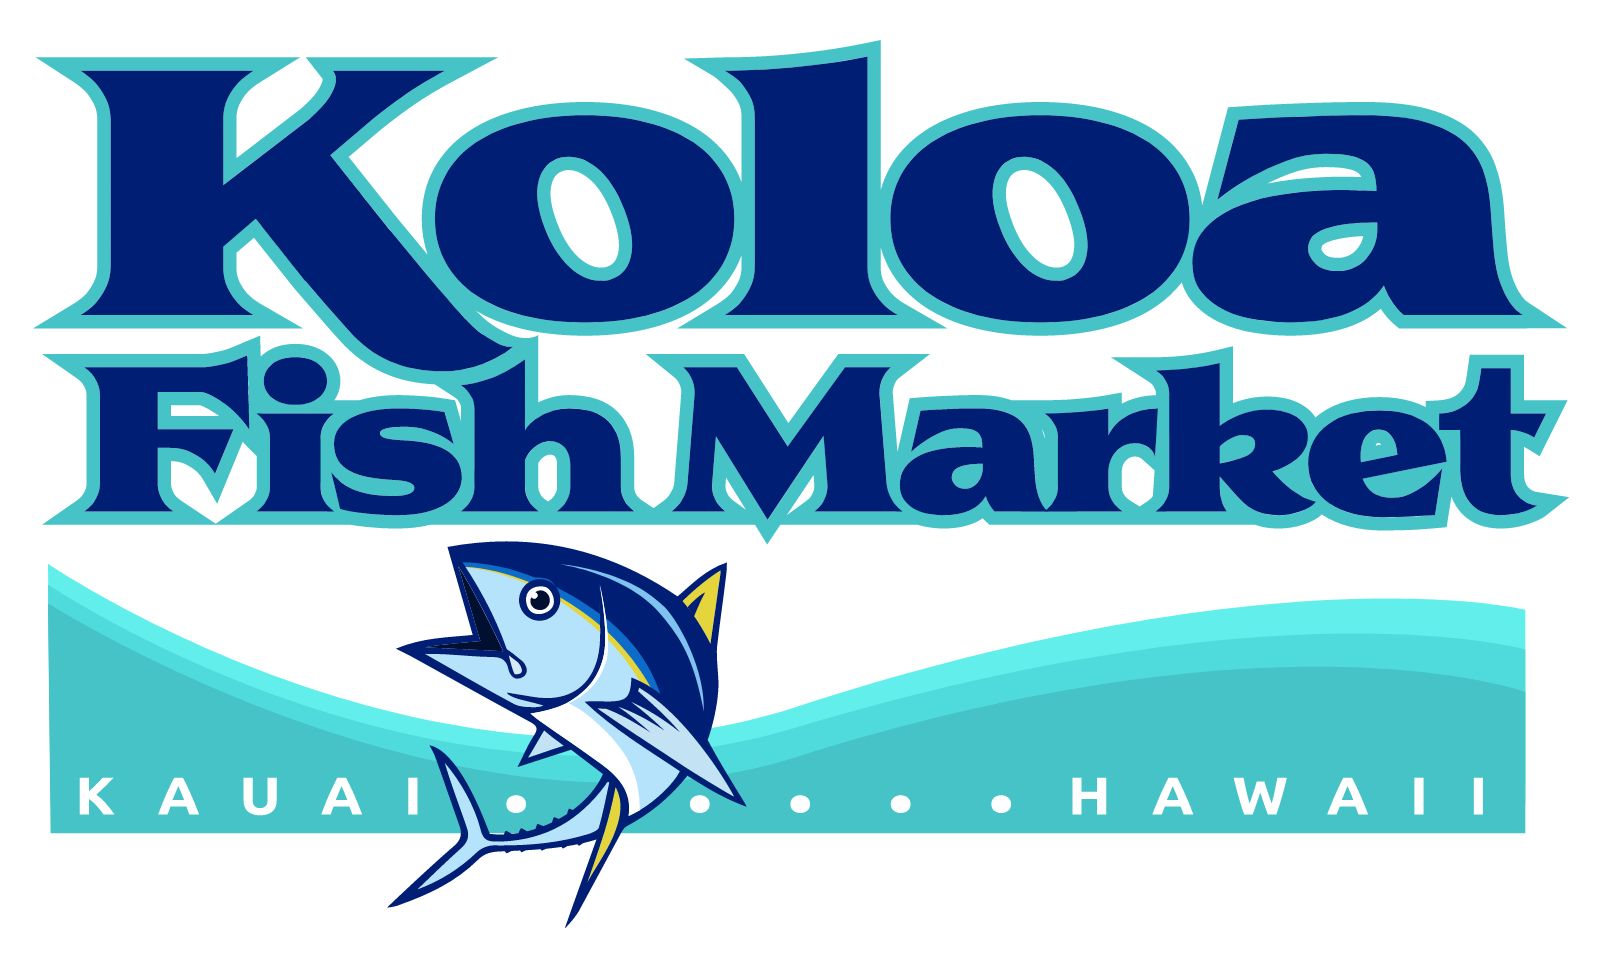 Koloa fish market